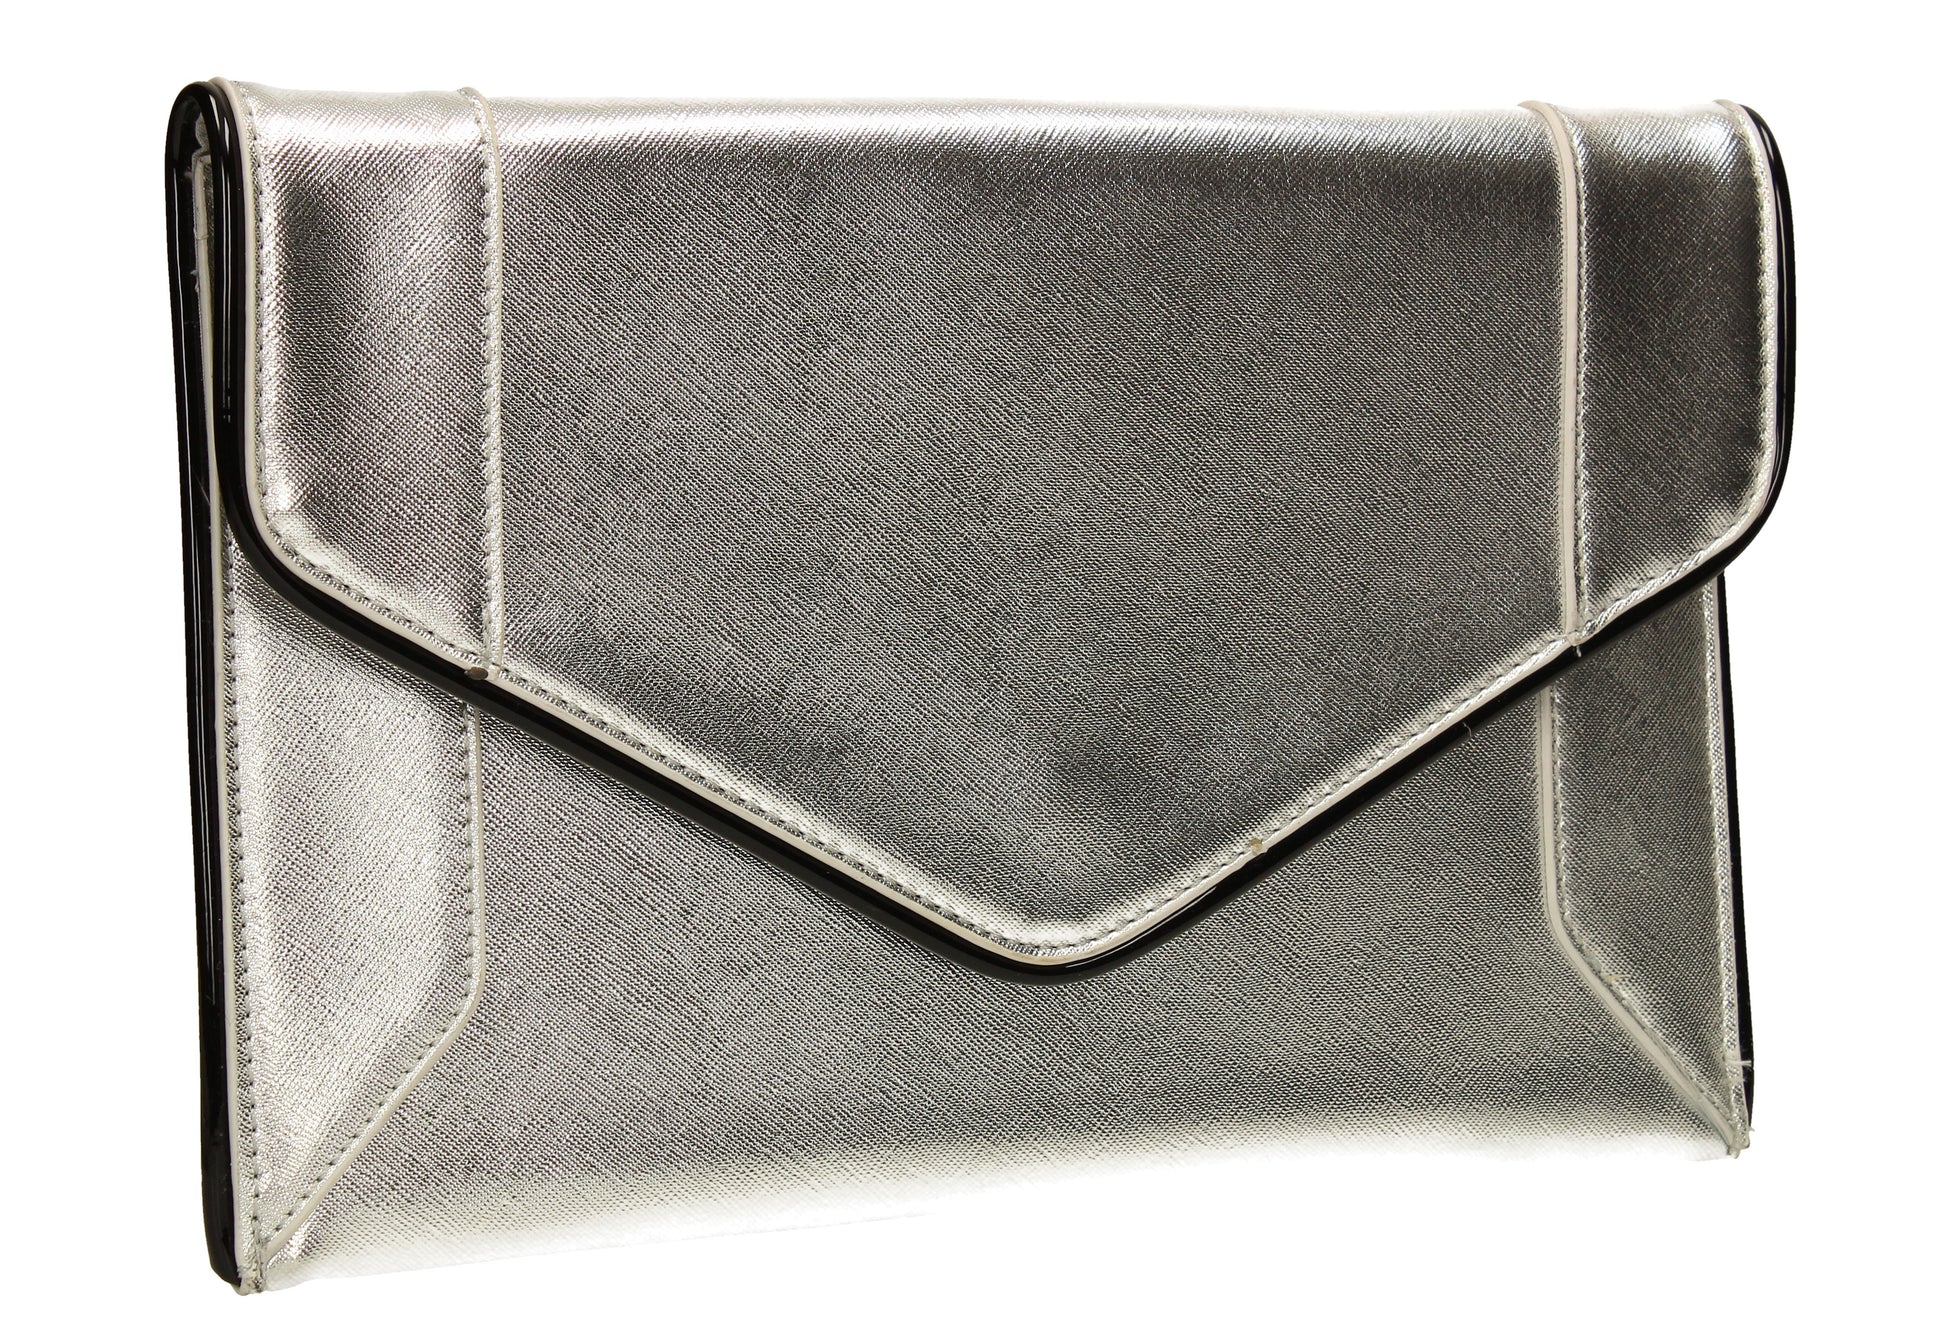 SWANKYSWANS Merlin Clutch Bag Silver Cute Cheap Clutch Bag For Weddings School and Work